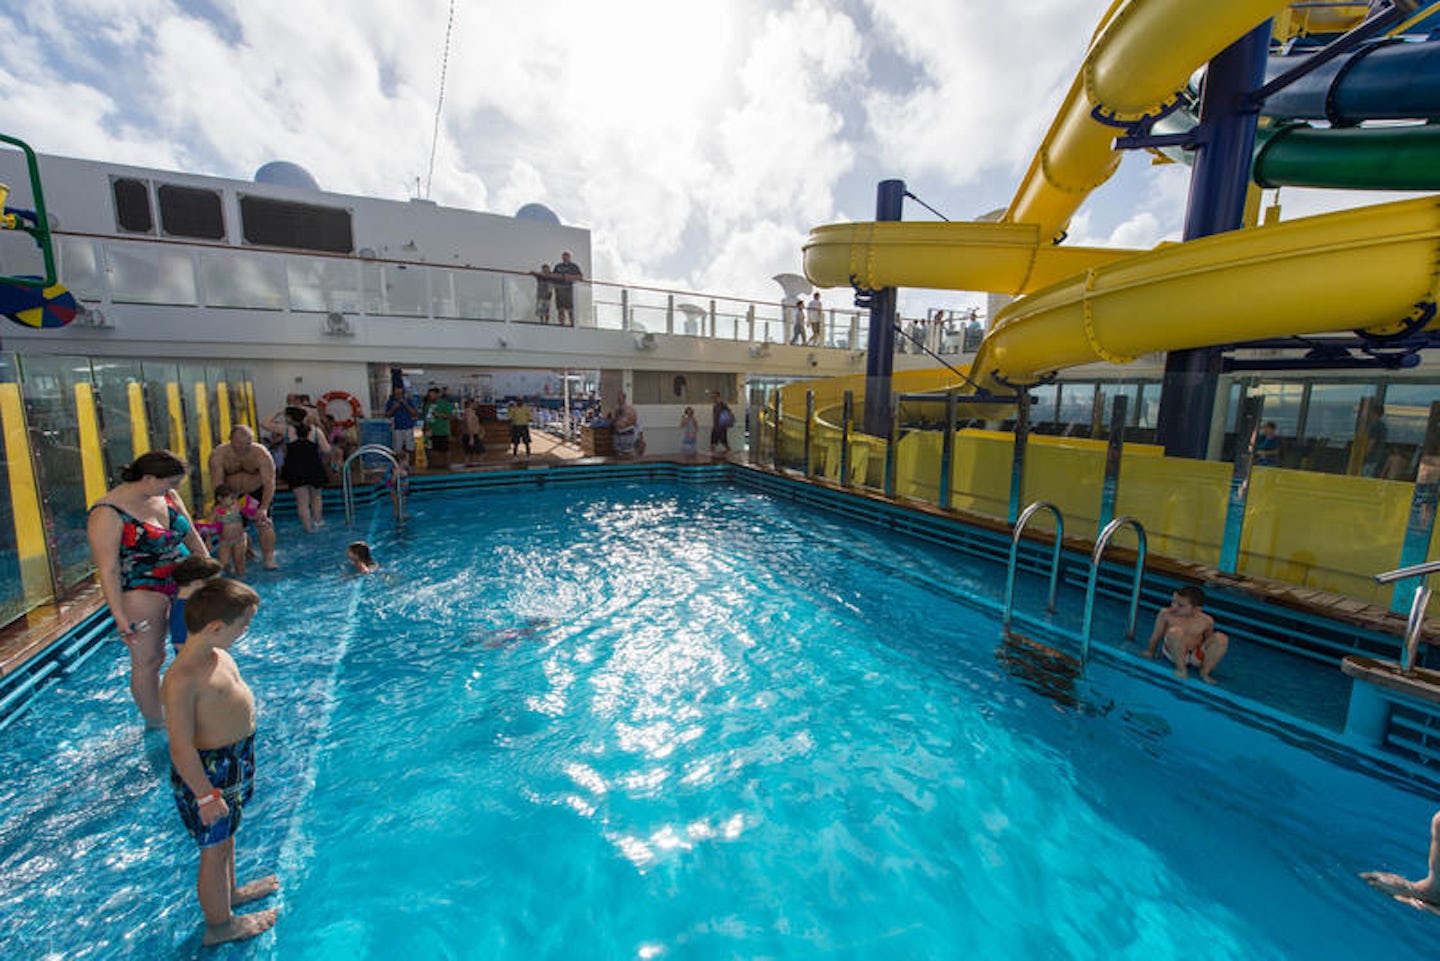 The Kids' Pool on Norwegian Escape